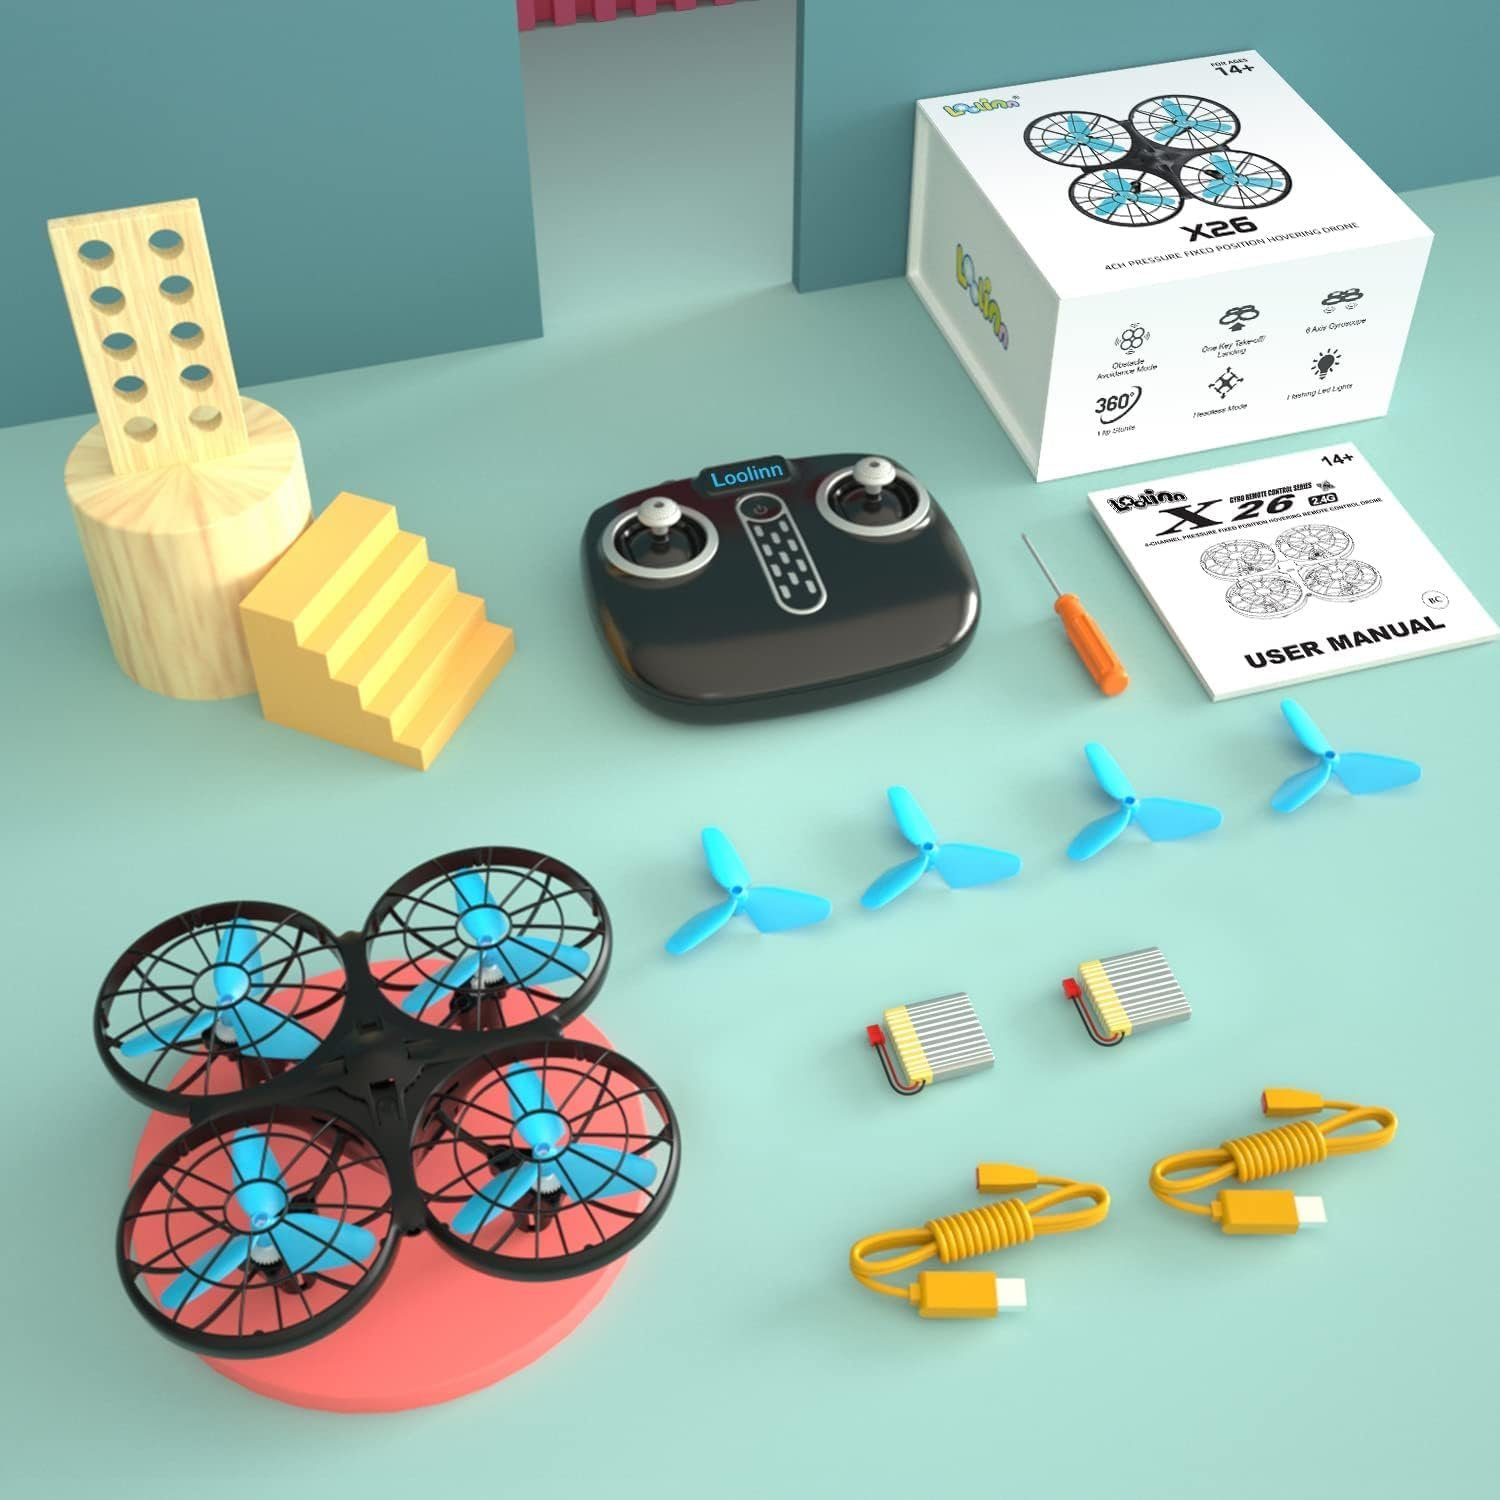 Kinder Drohne 360° RC (Mini Geschenk Flips Antikollision) Loolinn Quadrocopter